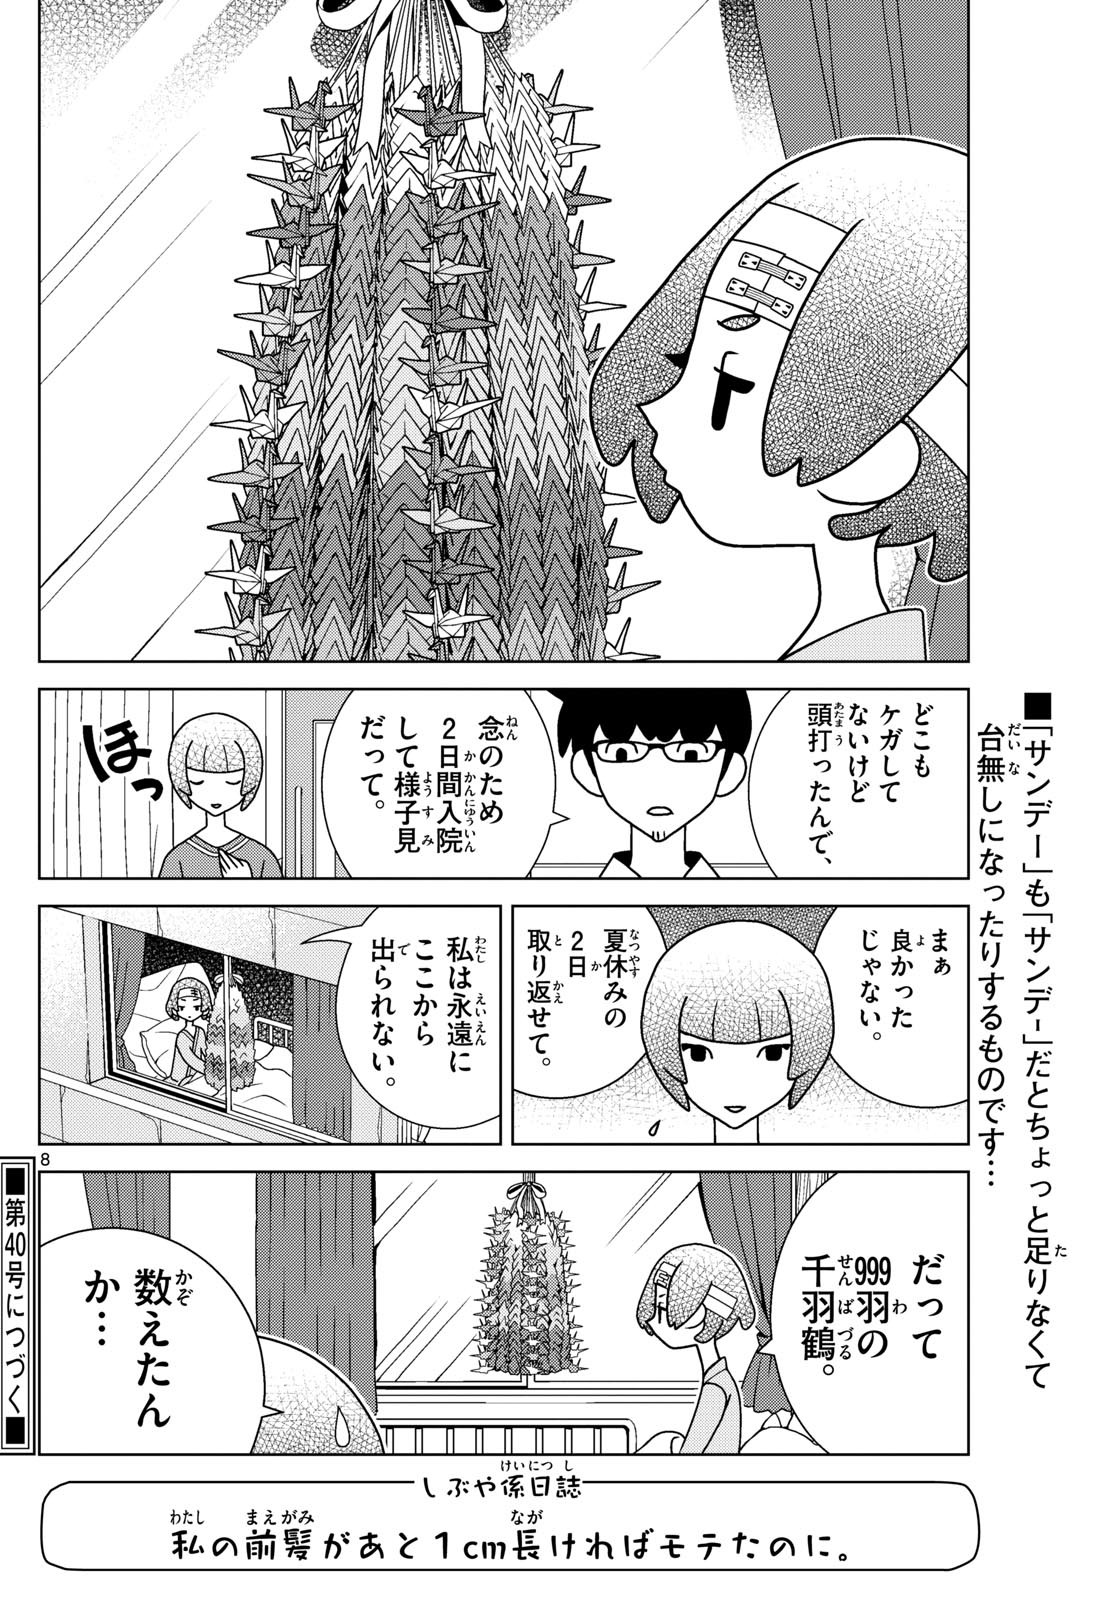 Shibuya Near Family - Chapter 069 - Page 8